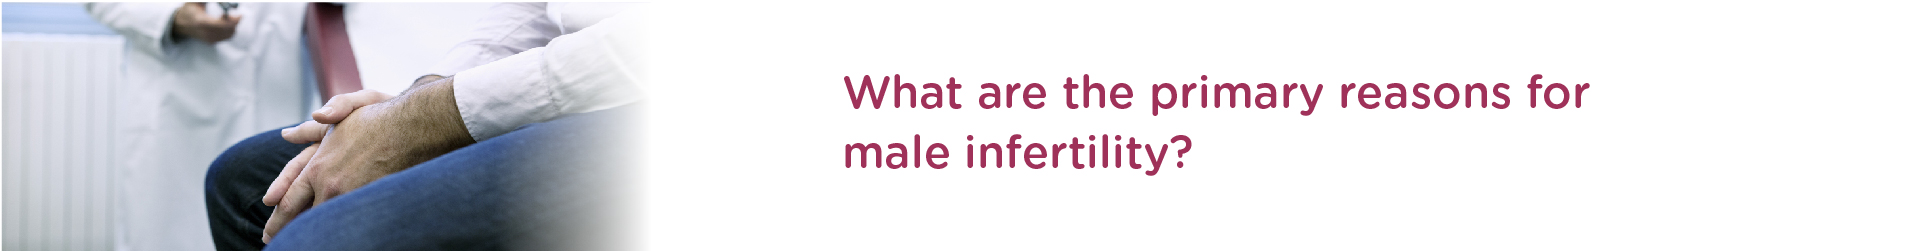 Reasons for Male Infertility